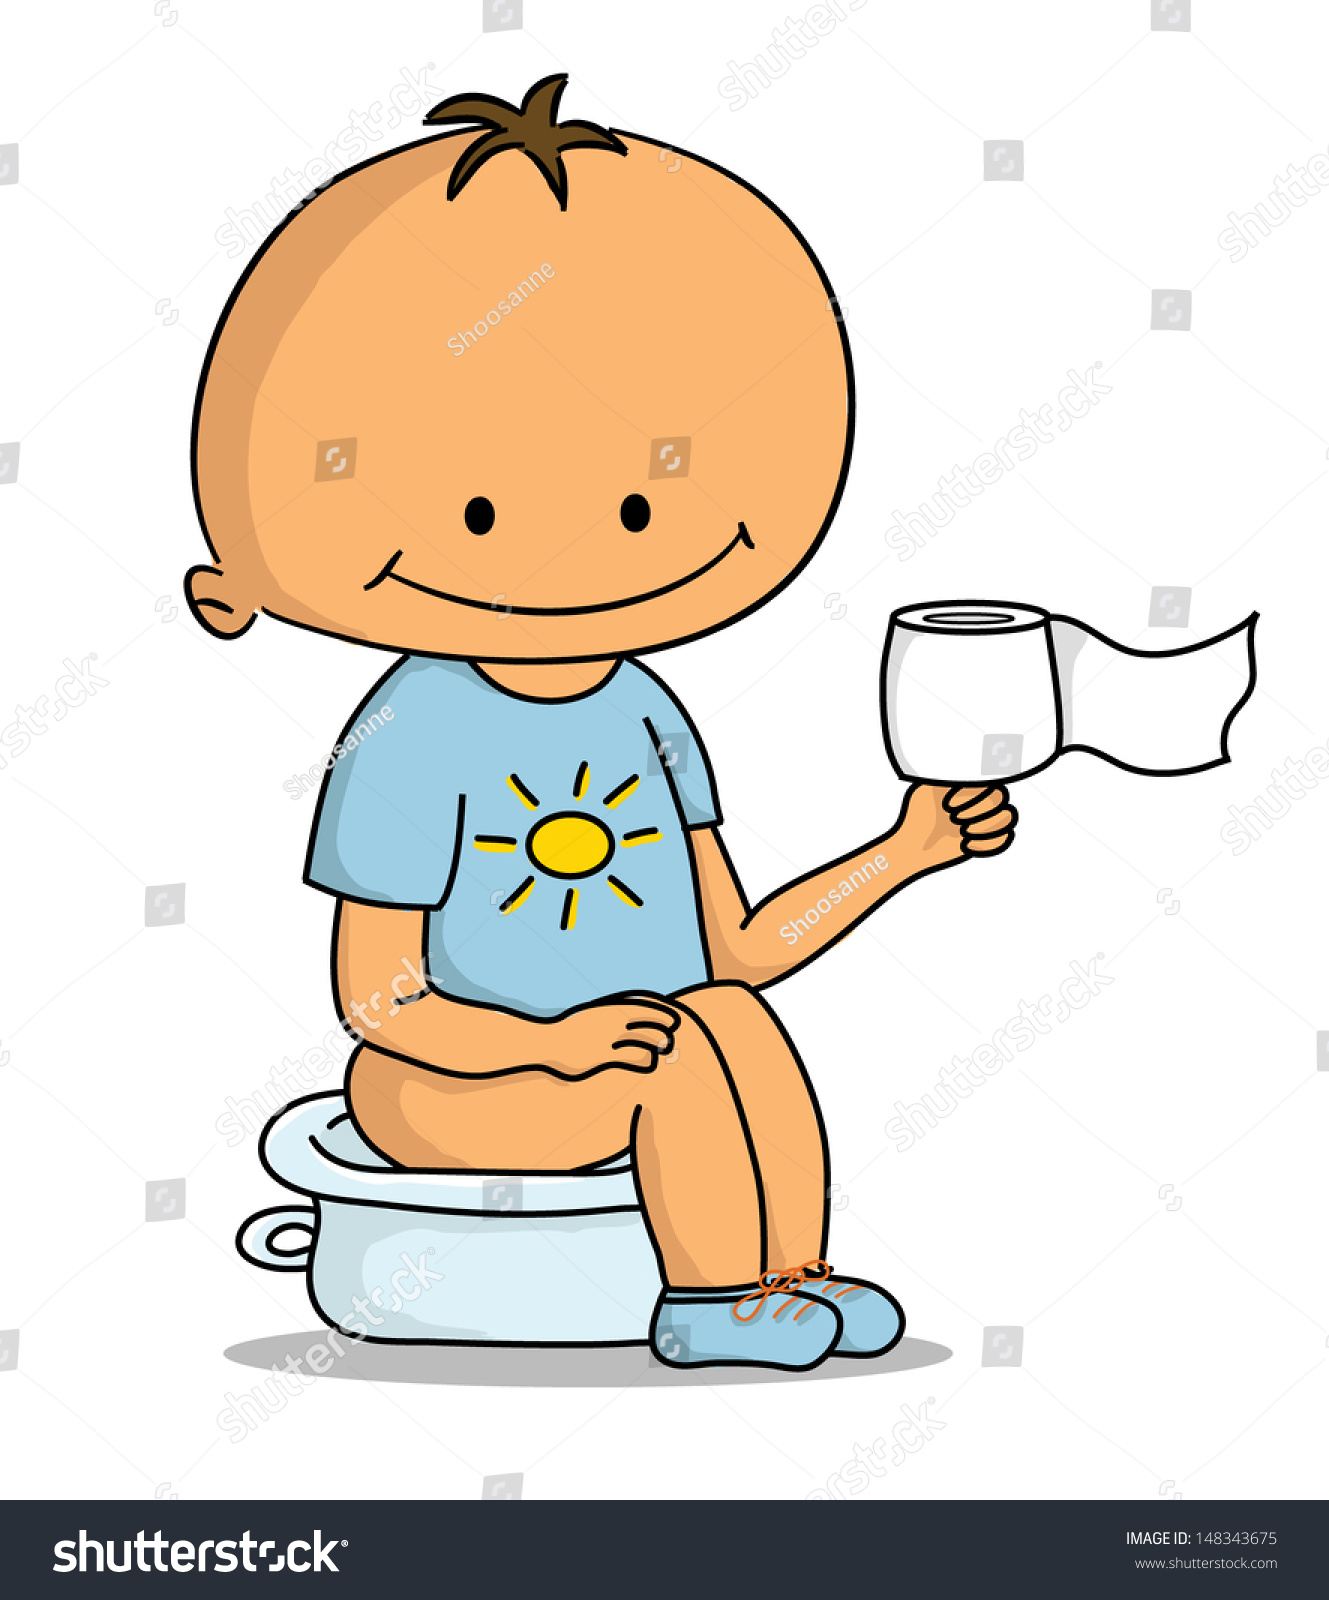 clipart sitting on toilet - photo #29